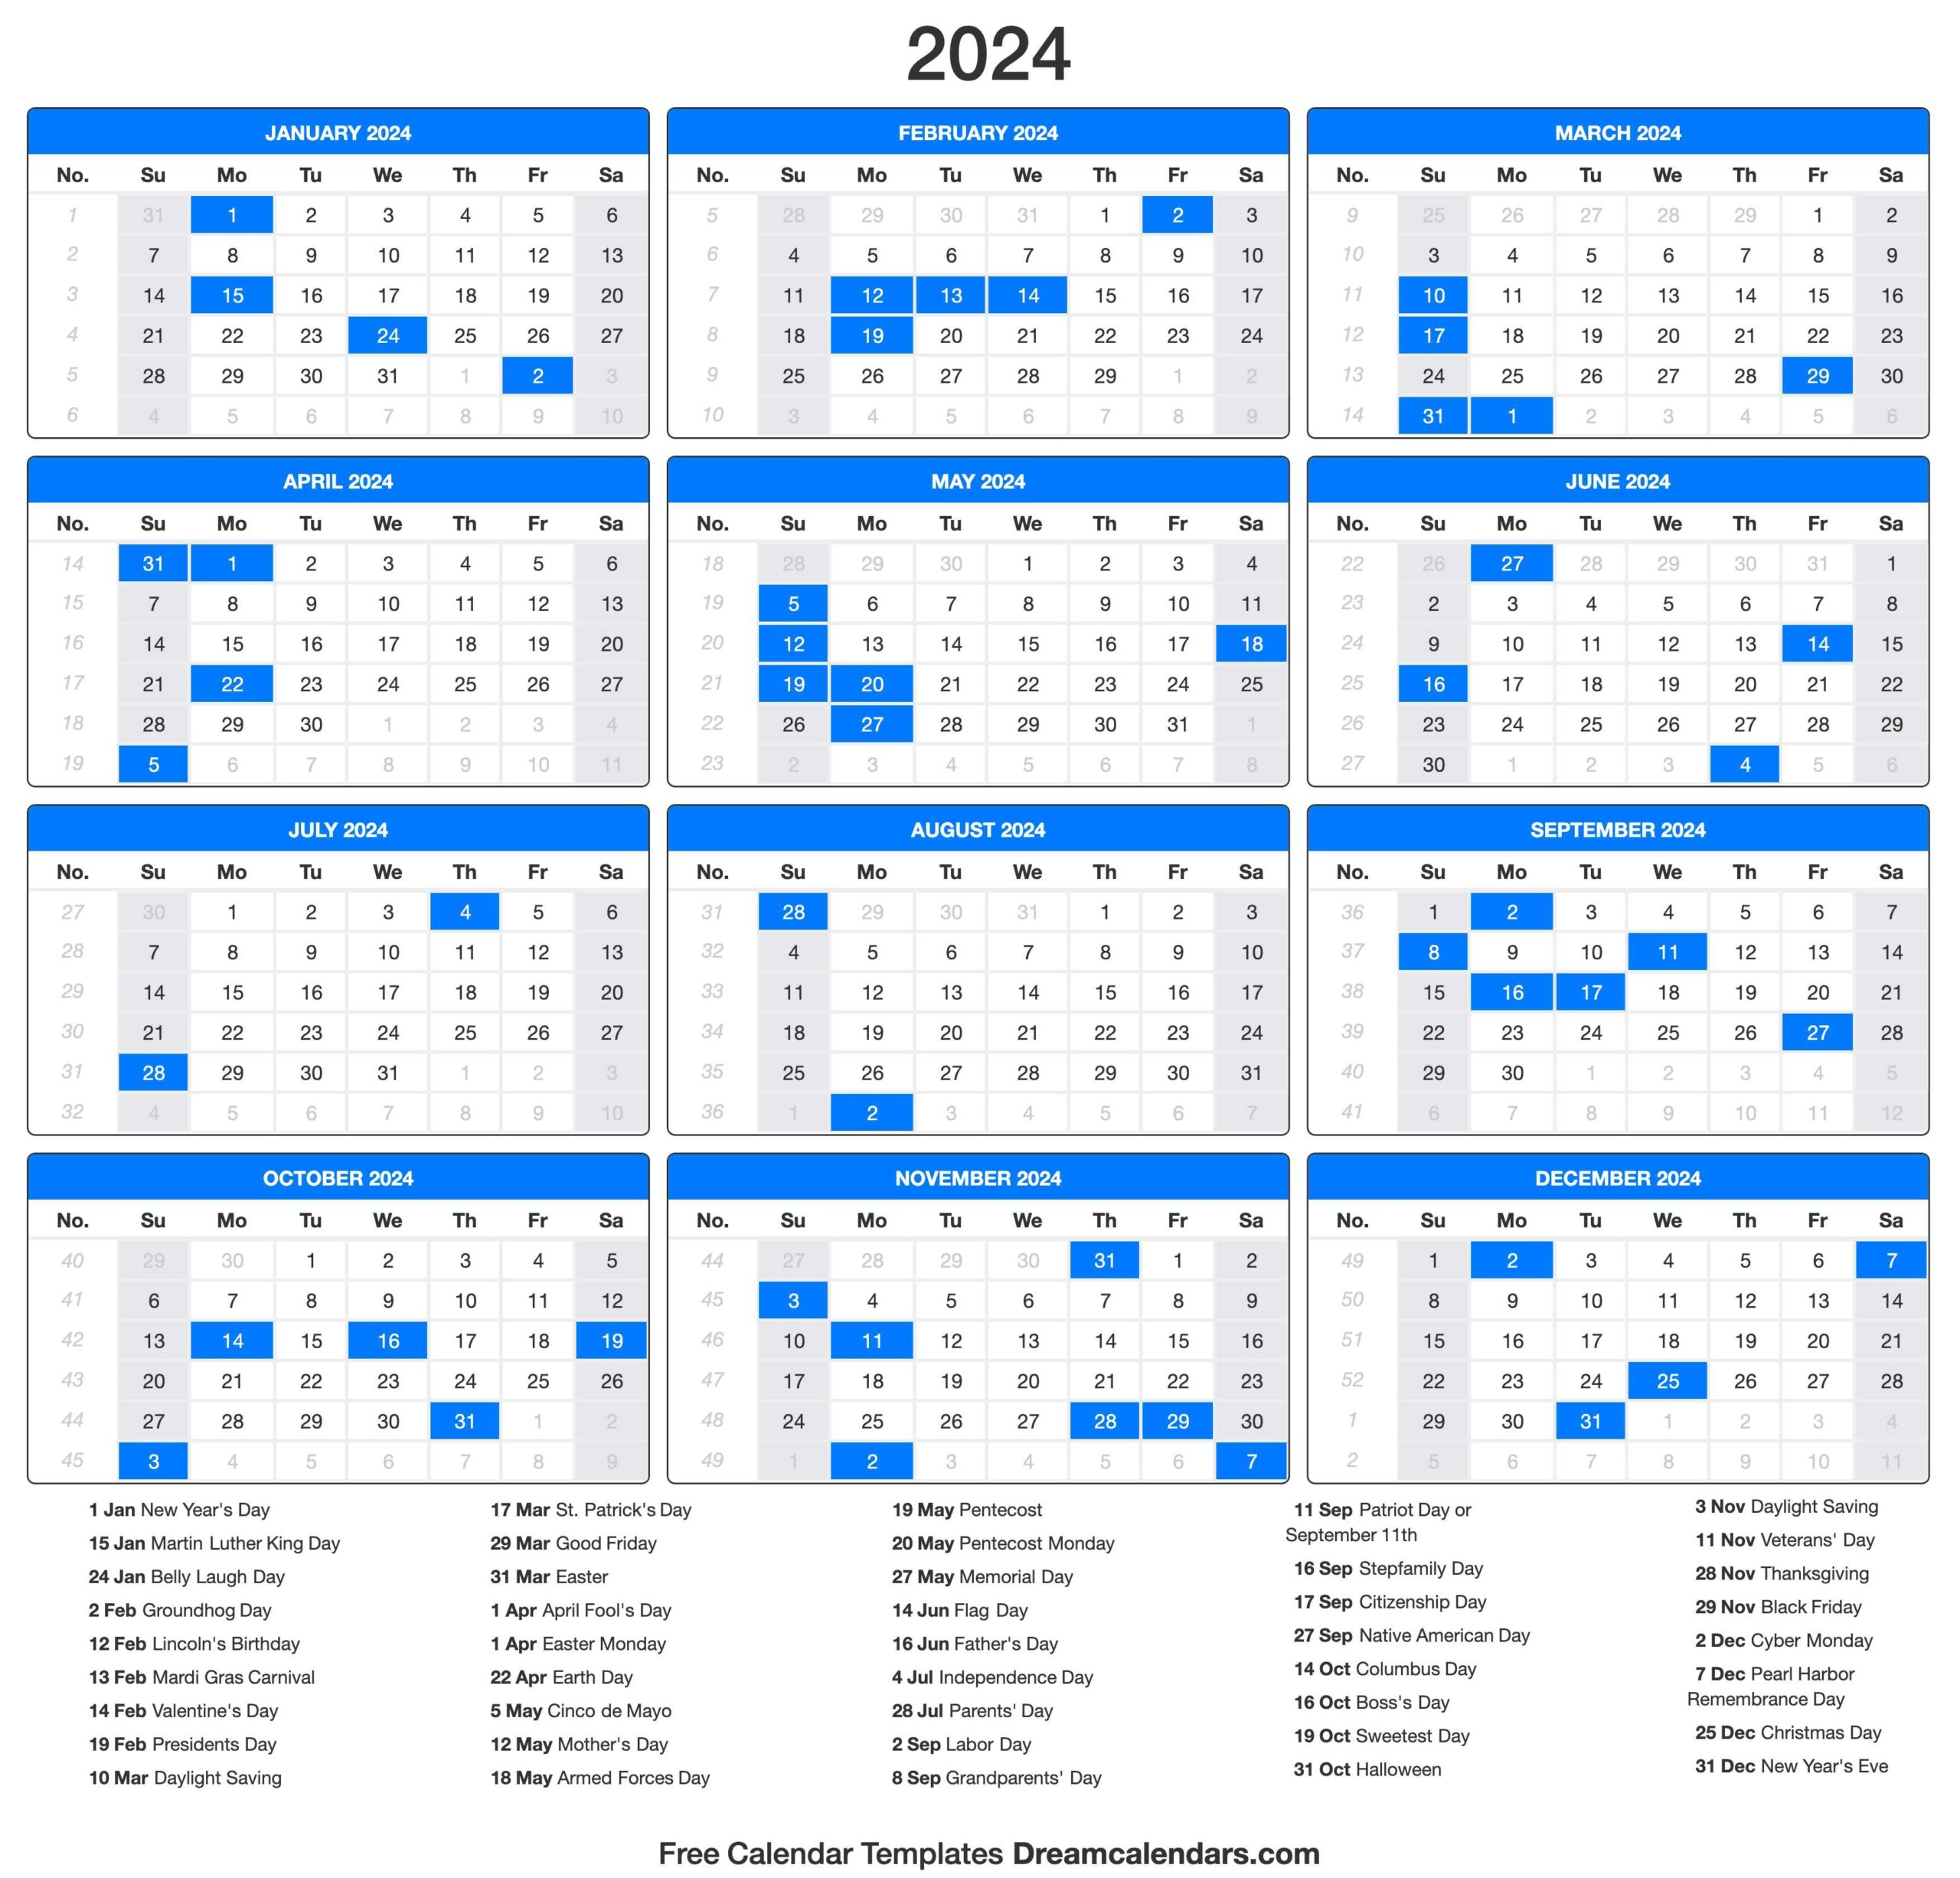 2024 Calendar - Free Printable 2024 Calender That I Can Write On